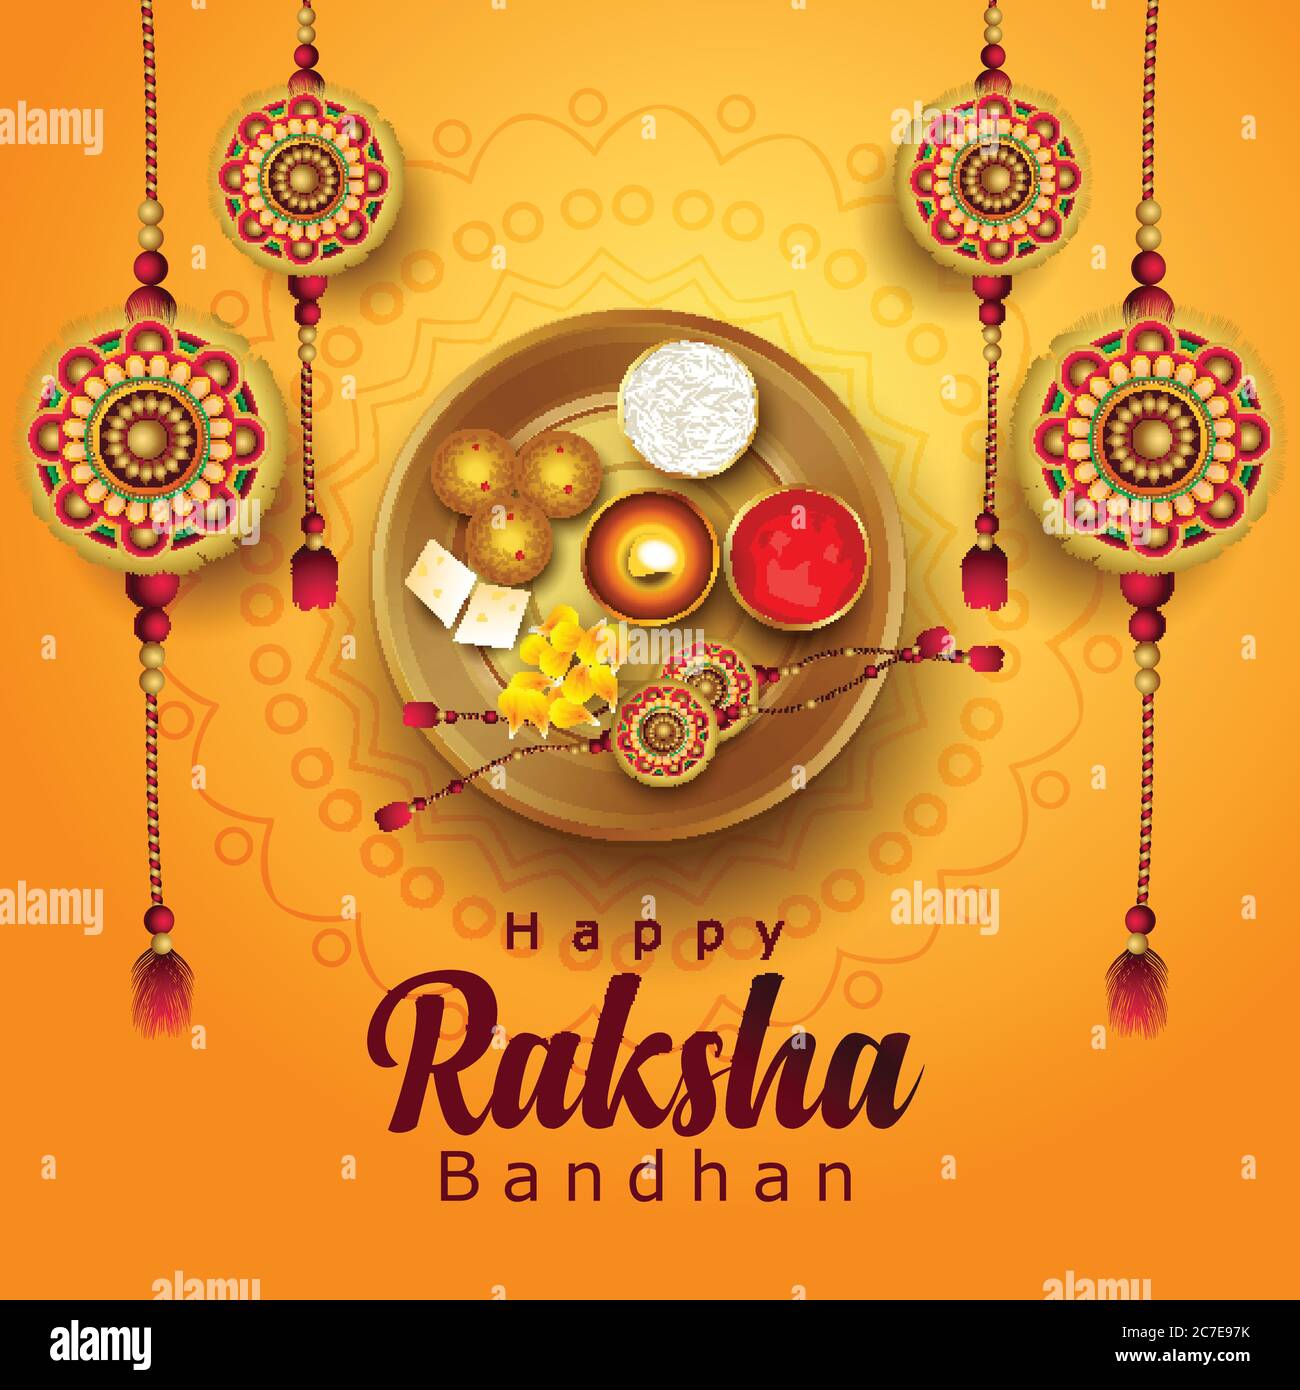 Happy Raksha Bandhan with stylish vector illustration in a ...